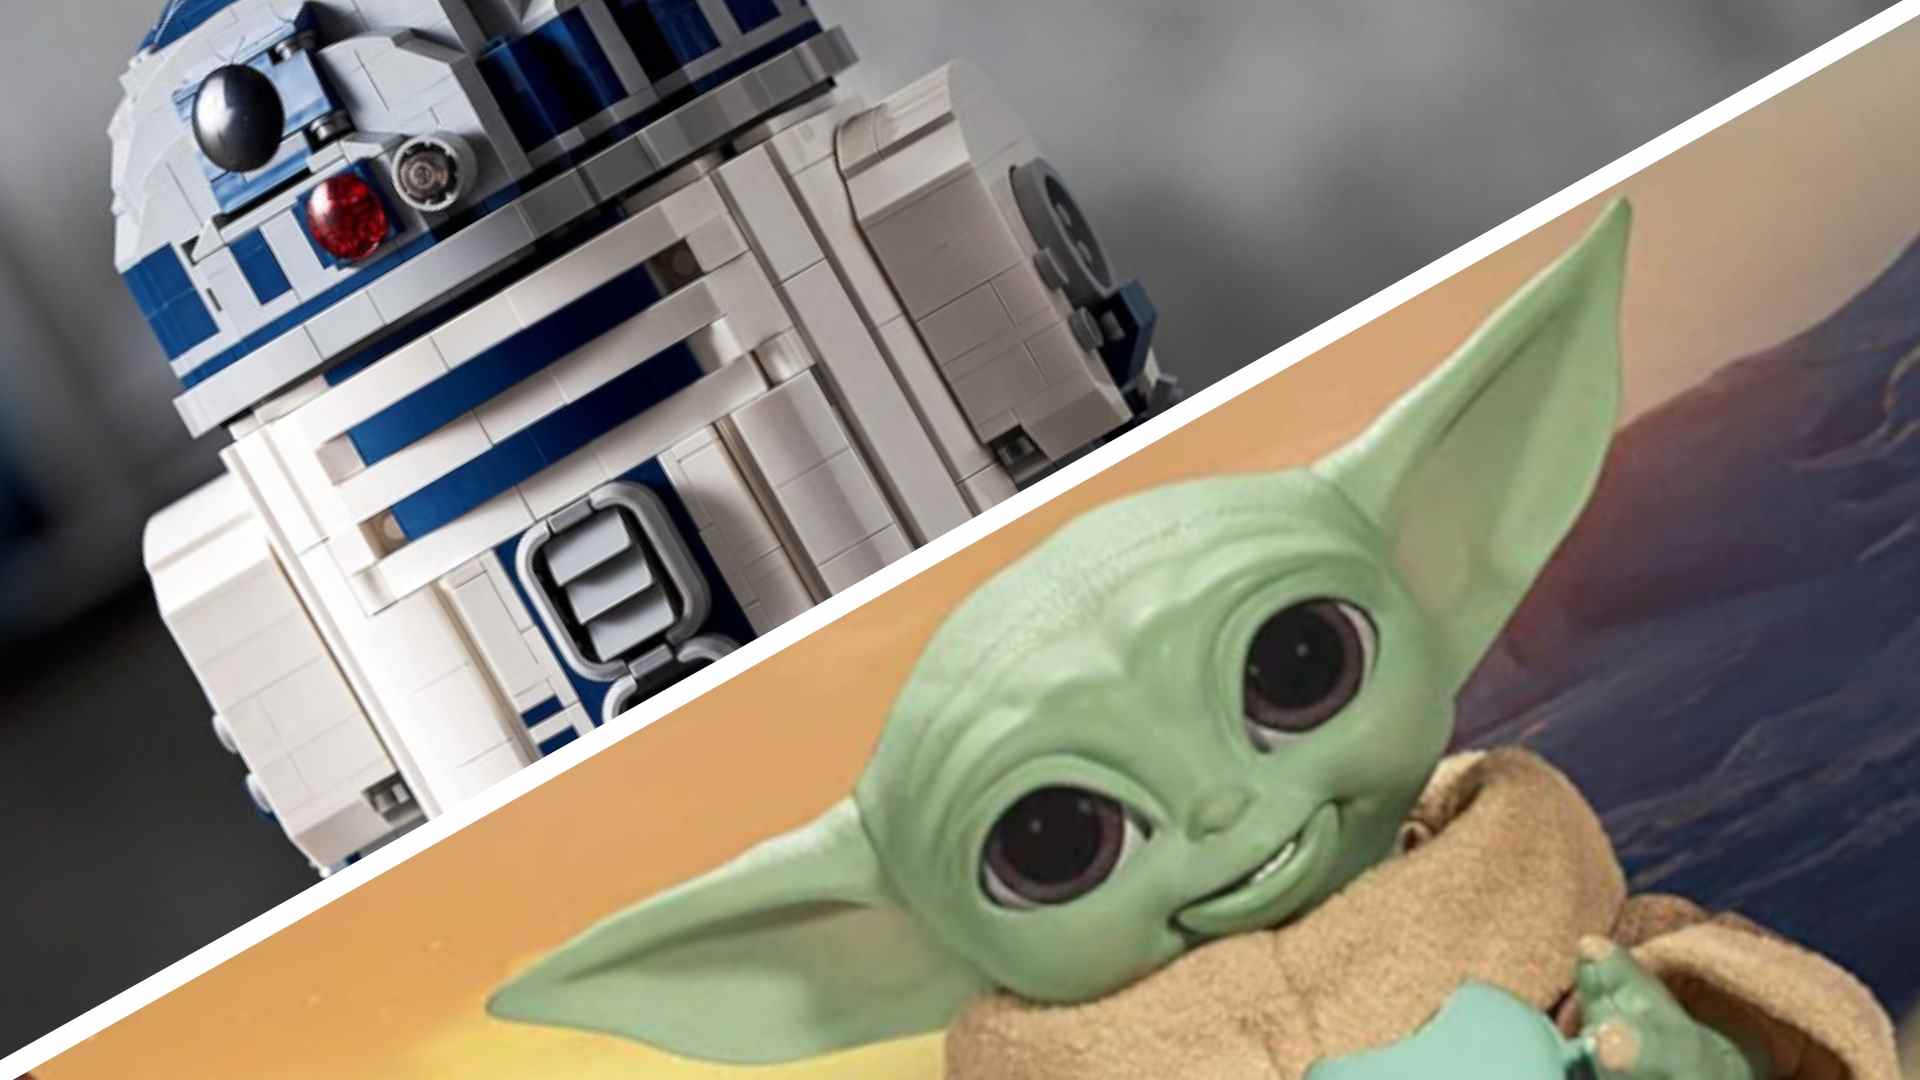 Ensemble LEGO R2-D2 avec le jouet Galactic Snackin' Grogu